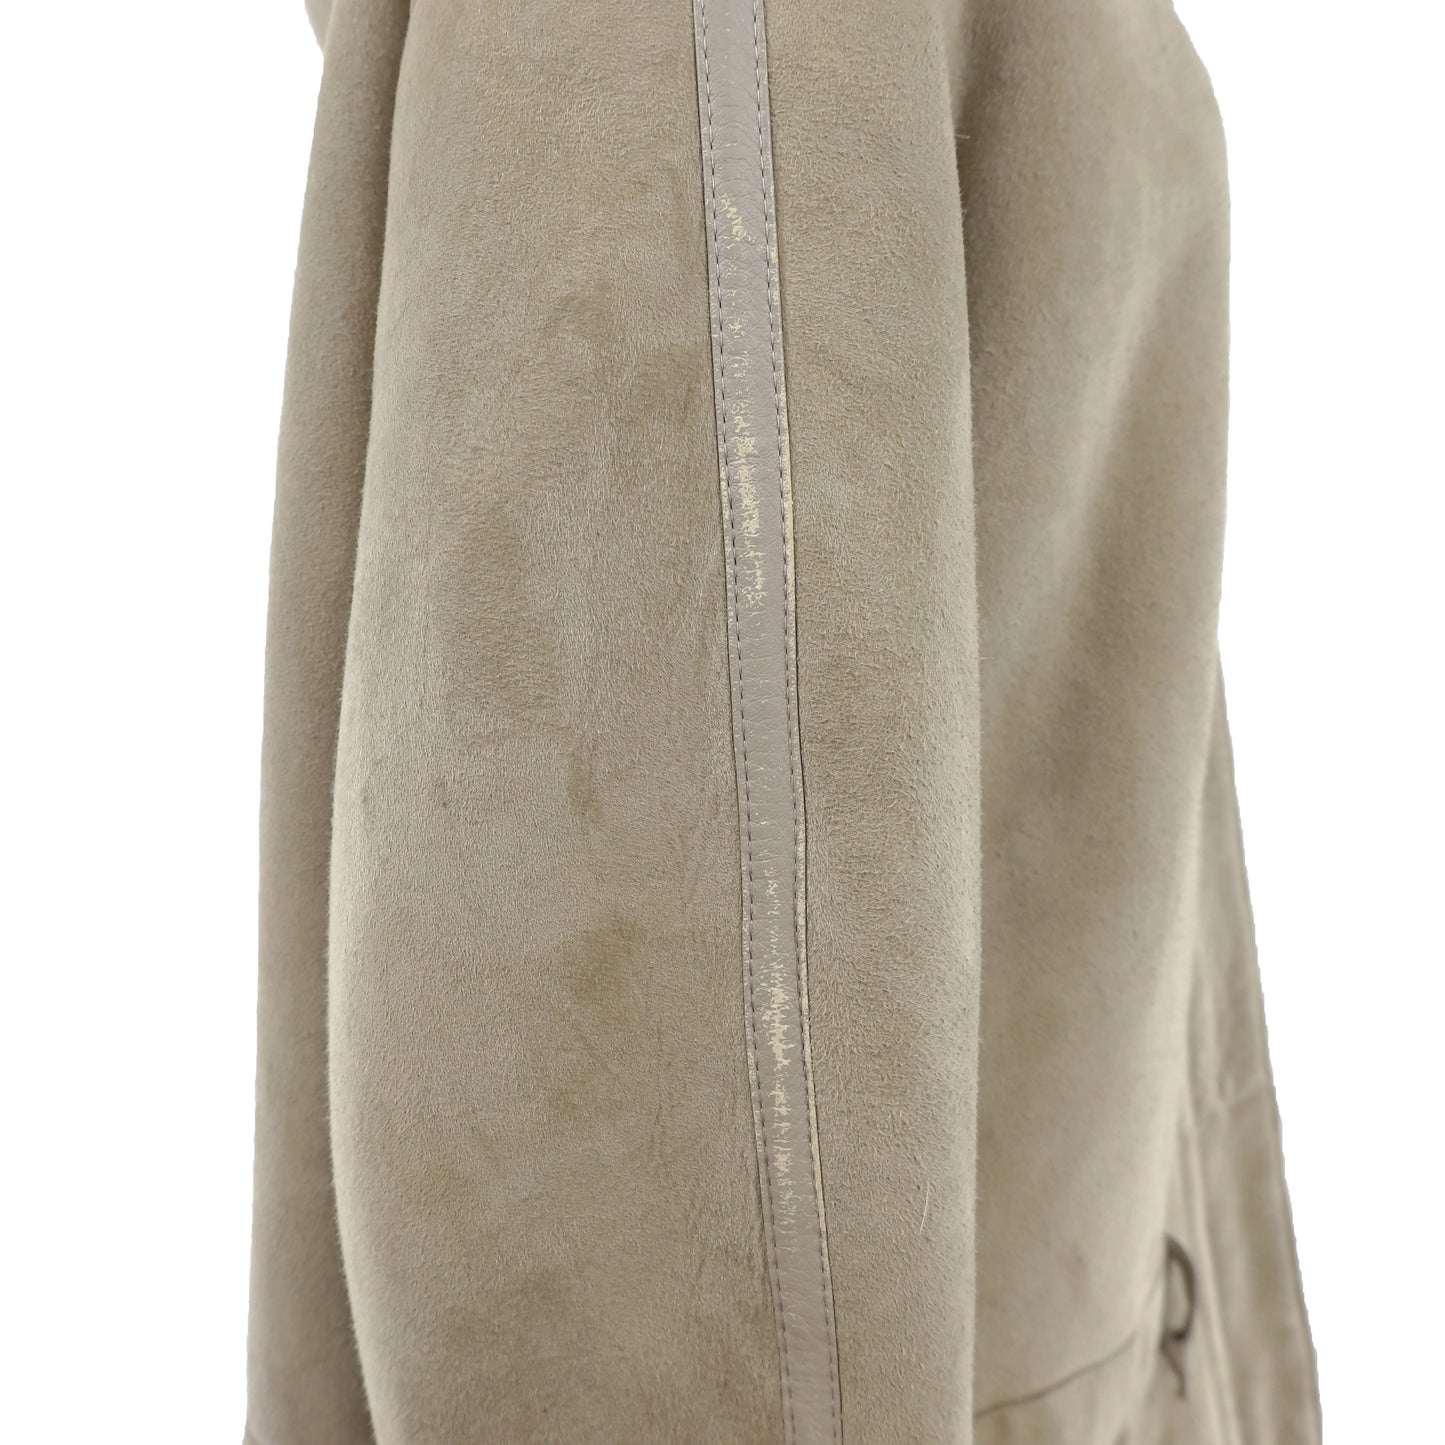 Hooded Shearling Coat- Size XXL